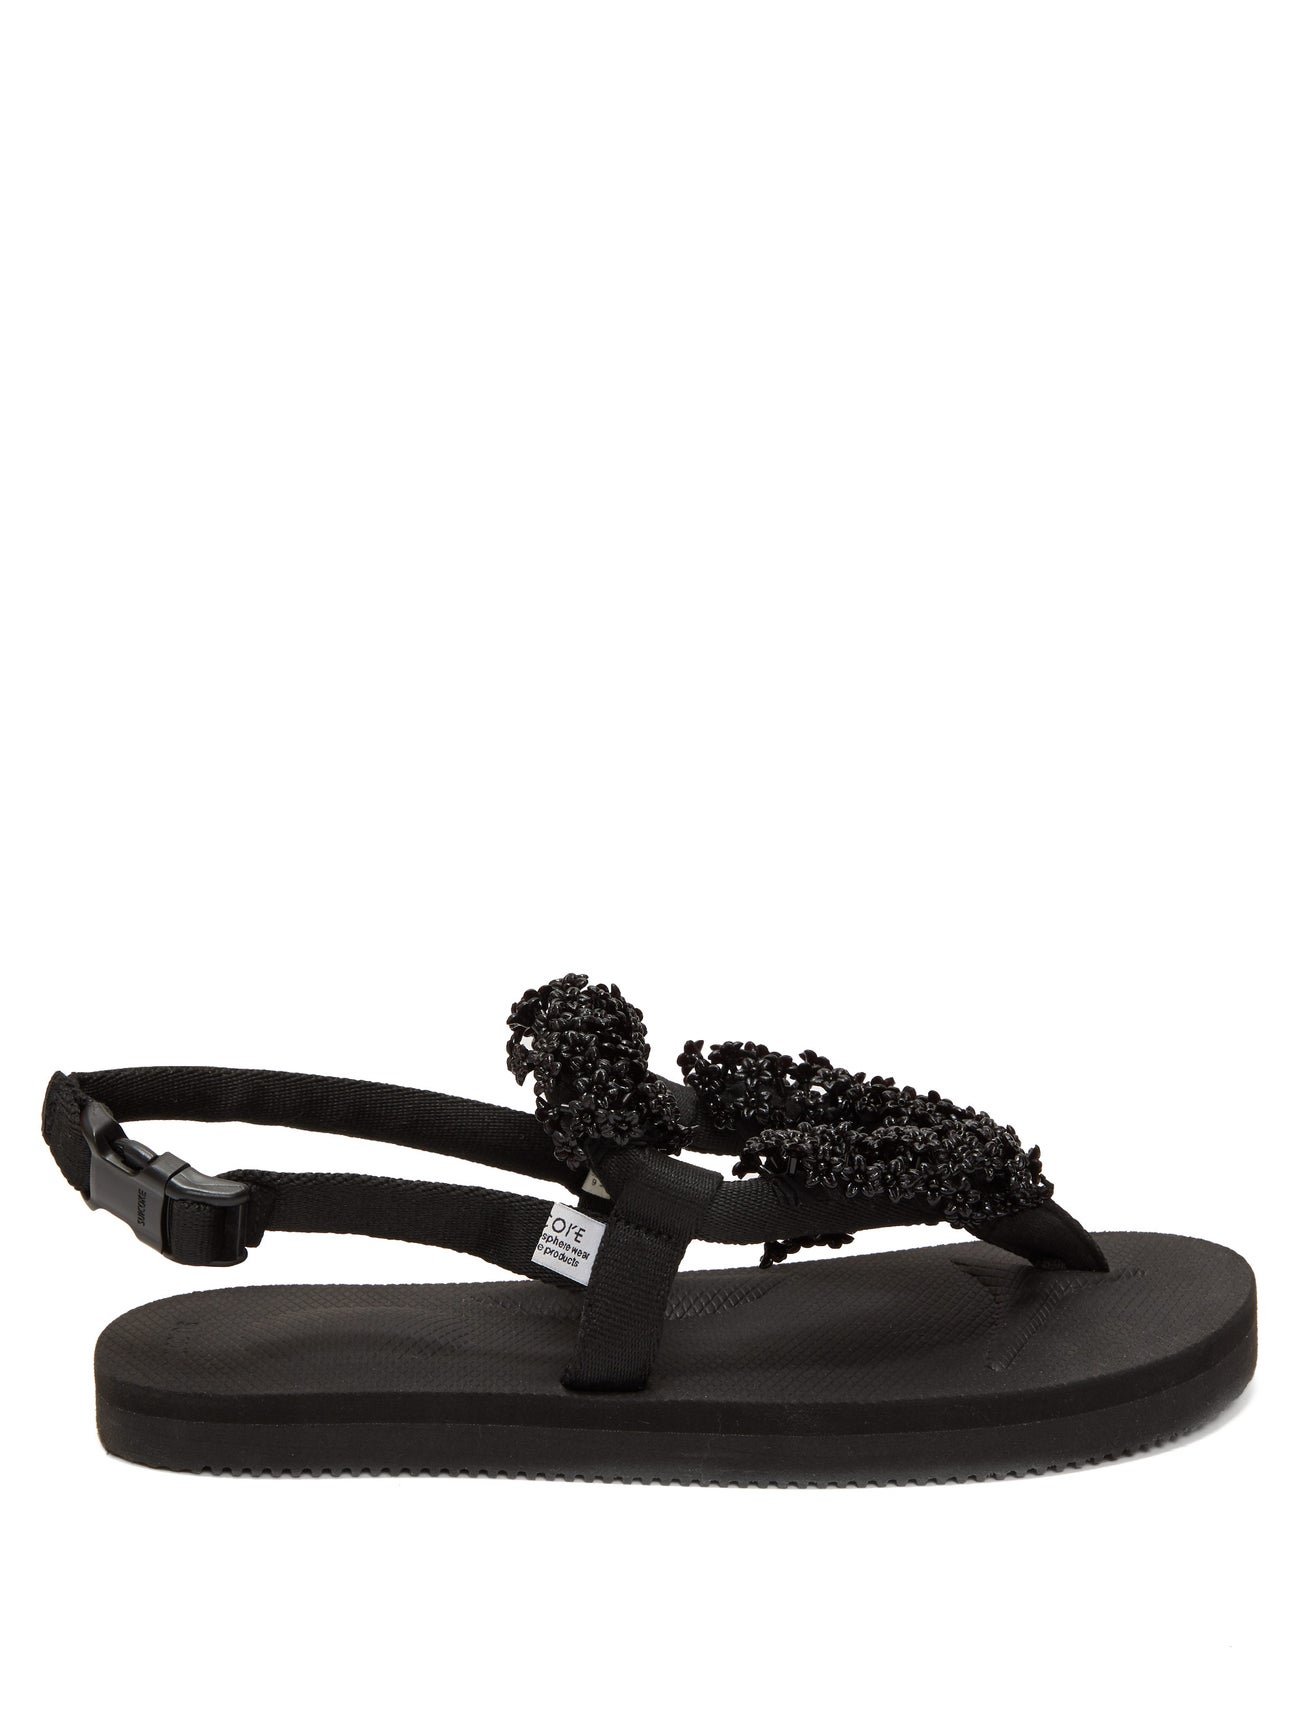 CECILIE BAHNSEN X Suicoke Kat Flower-Beaded Sandals in Black